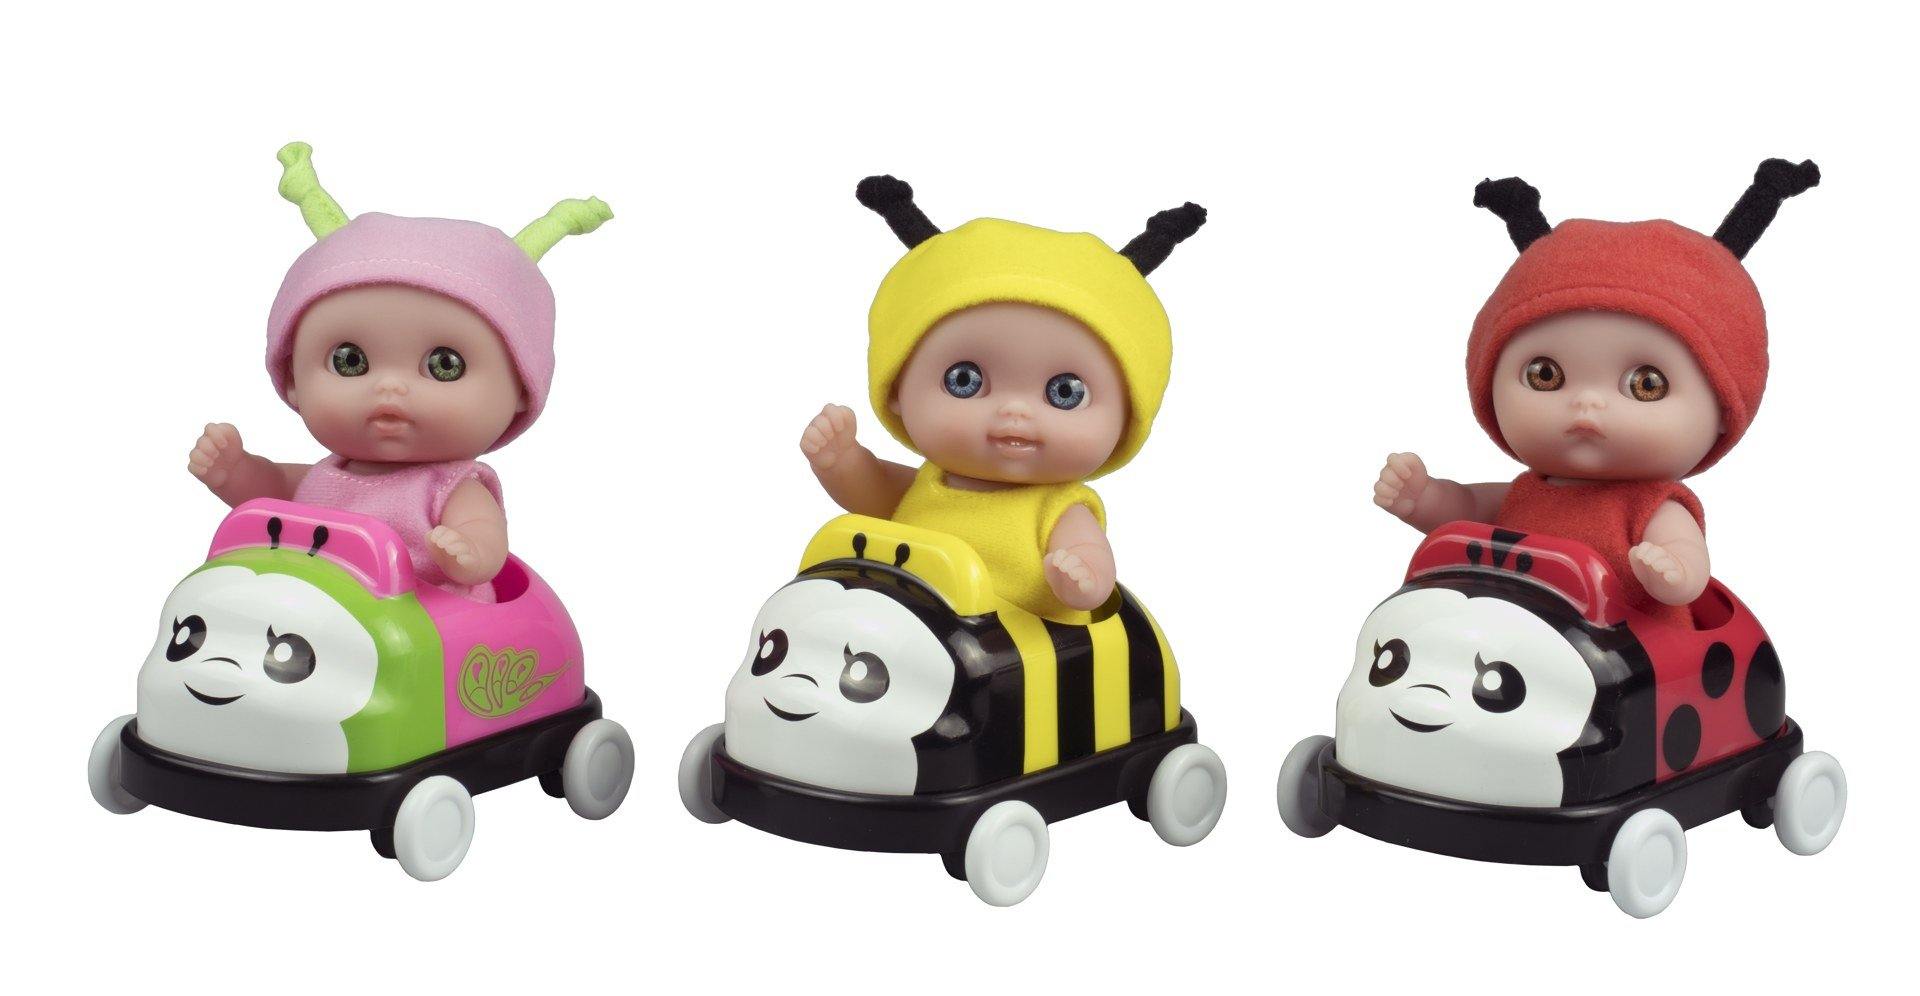 Lil' Cutesies 5" All Vinyl Dolls w/ Assorted Bug Buggies in Gift Box - JC Toys Group Inc.